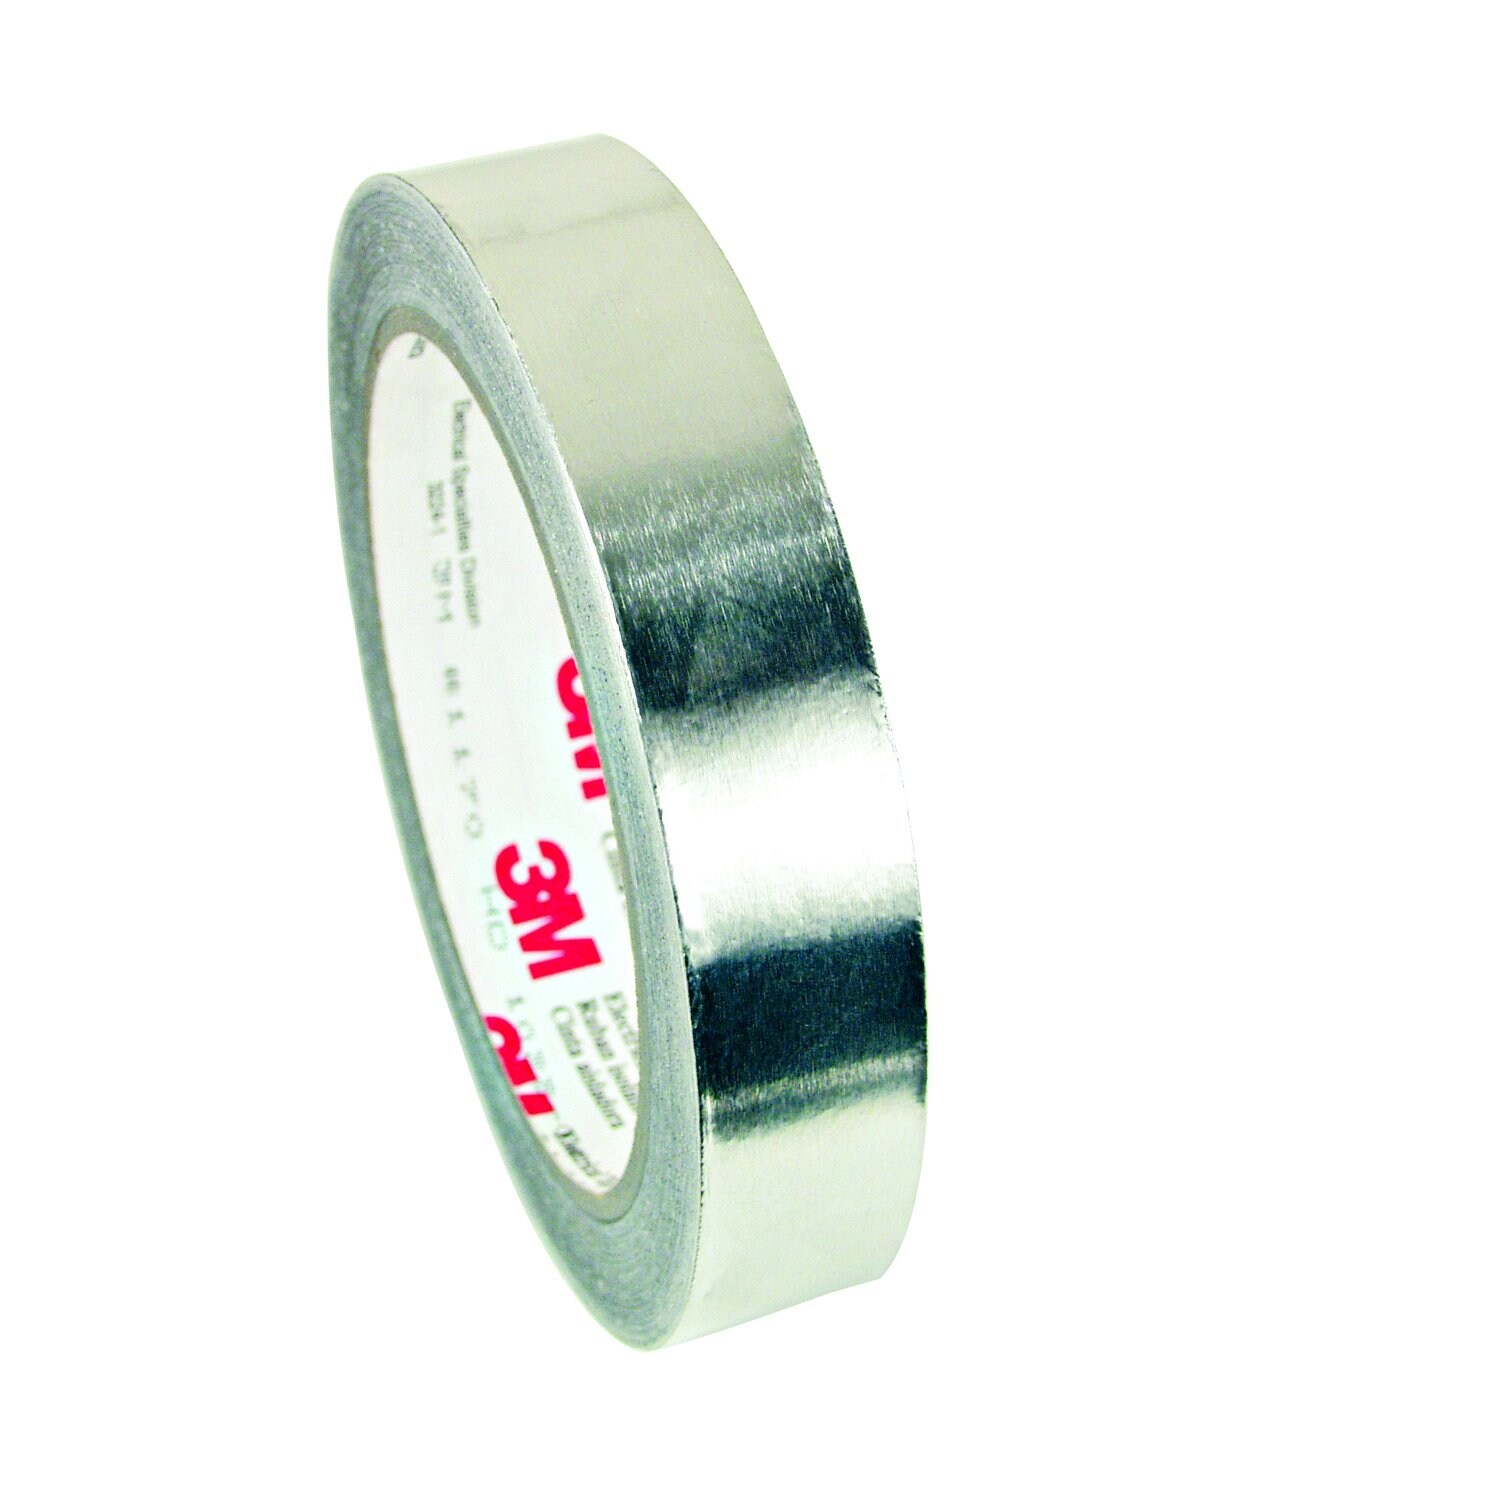 7000132710 - 3M EMI Aluminum Foil Shielding Tape 1170, 3/4 in x 18 yd, 12 Rolls/Case